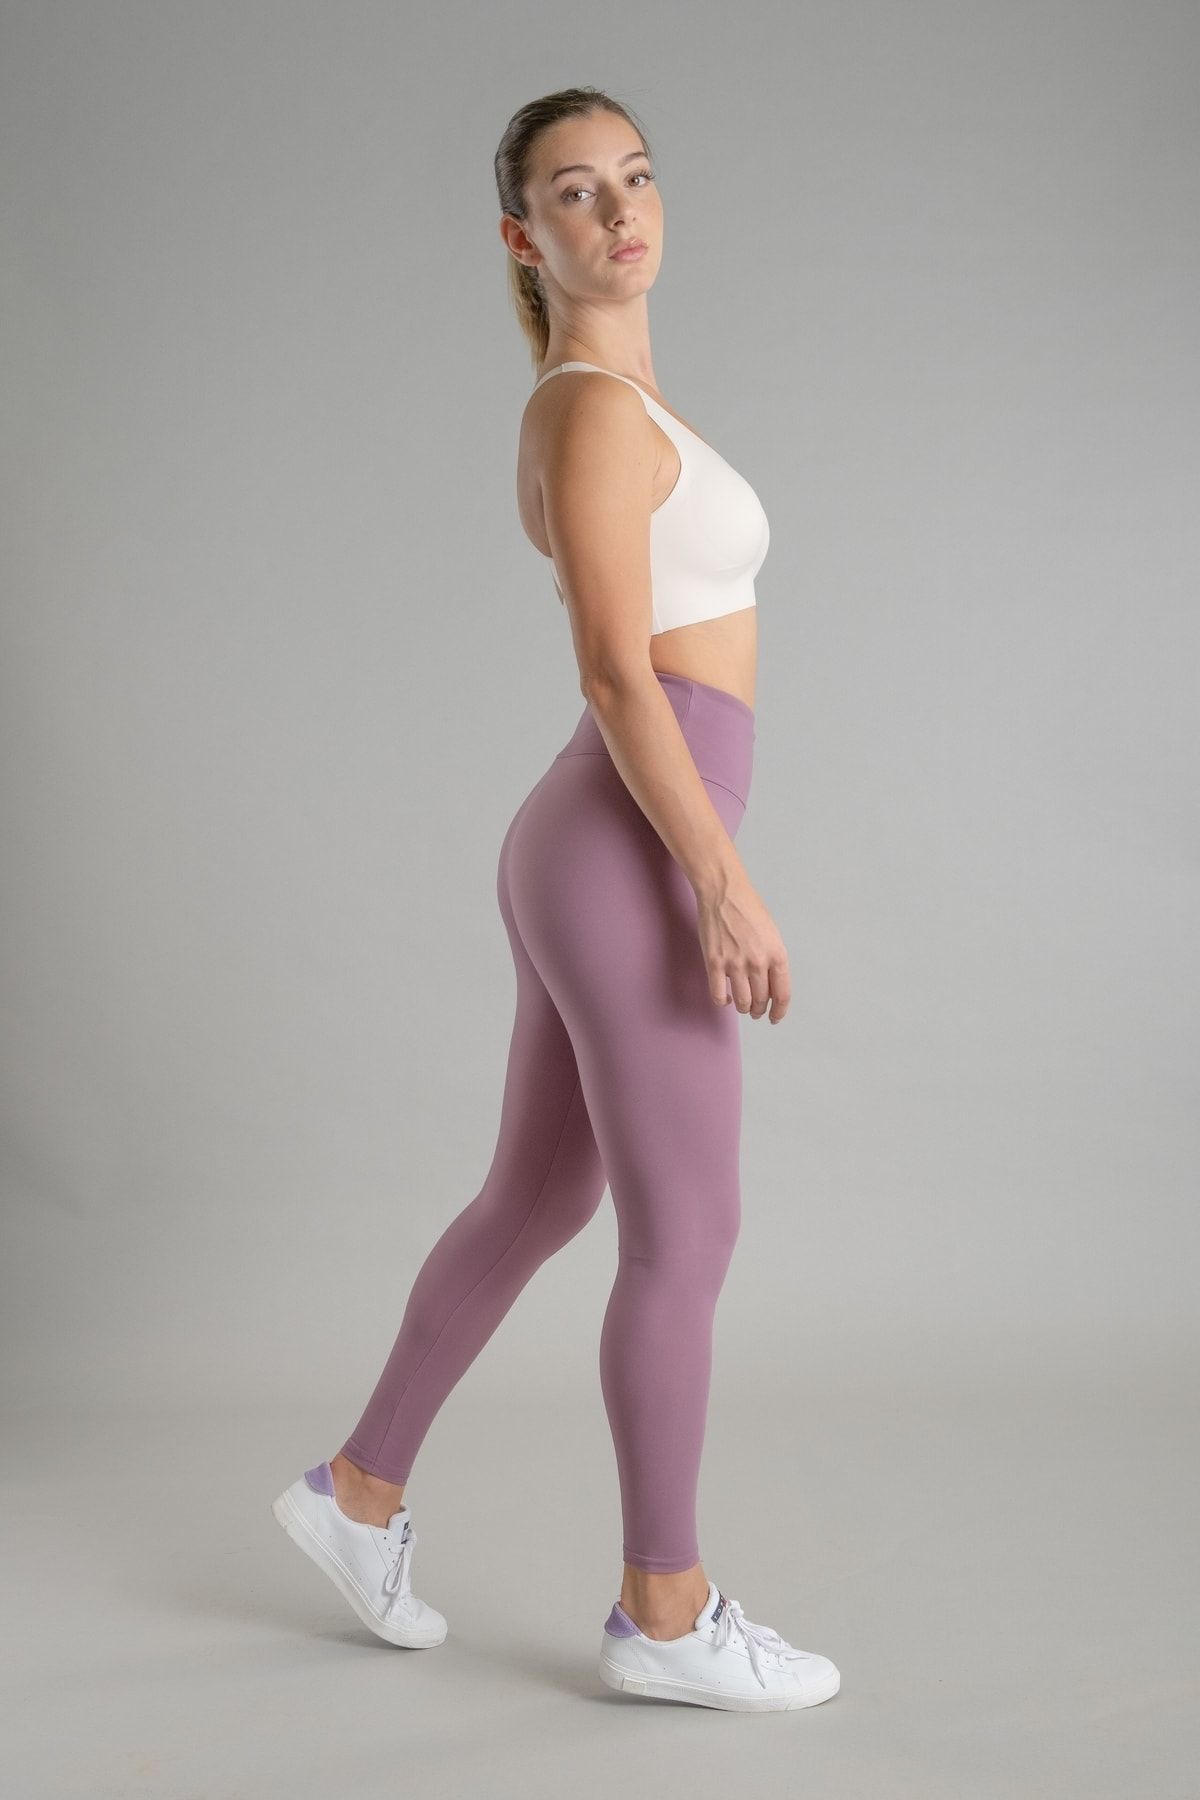 Vienfit Women's High Waist Push Up Tights Yoga Leggings Lilac 7/8